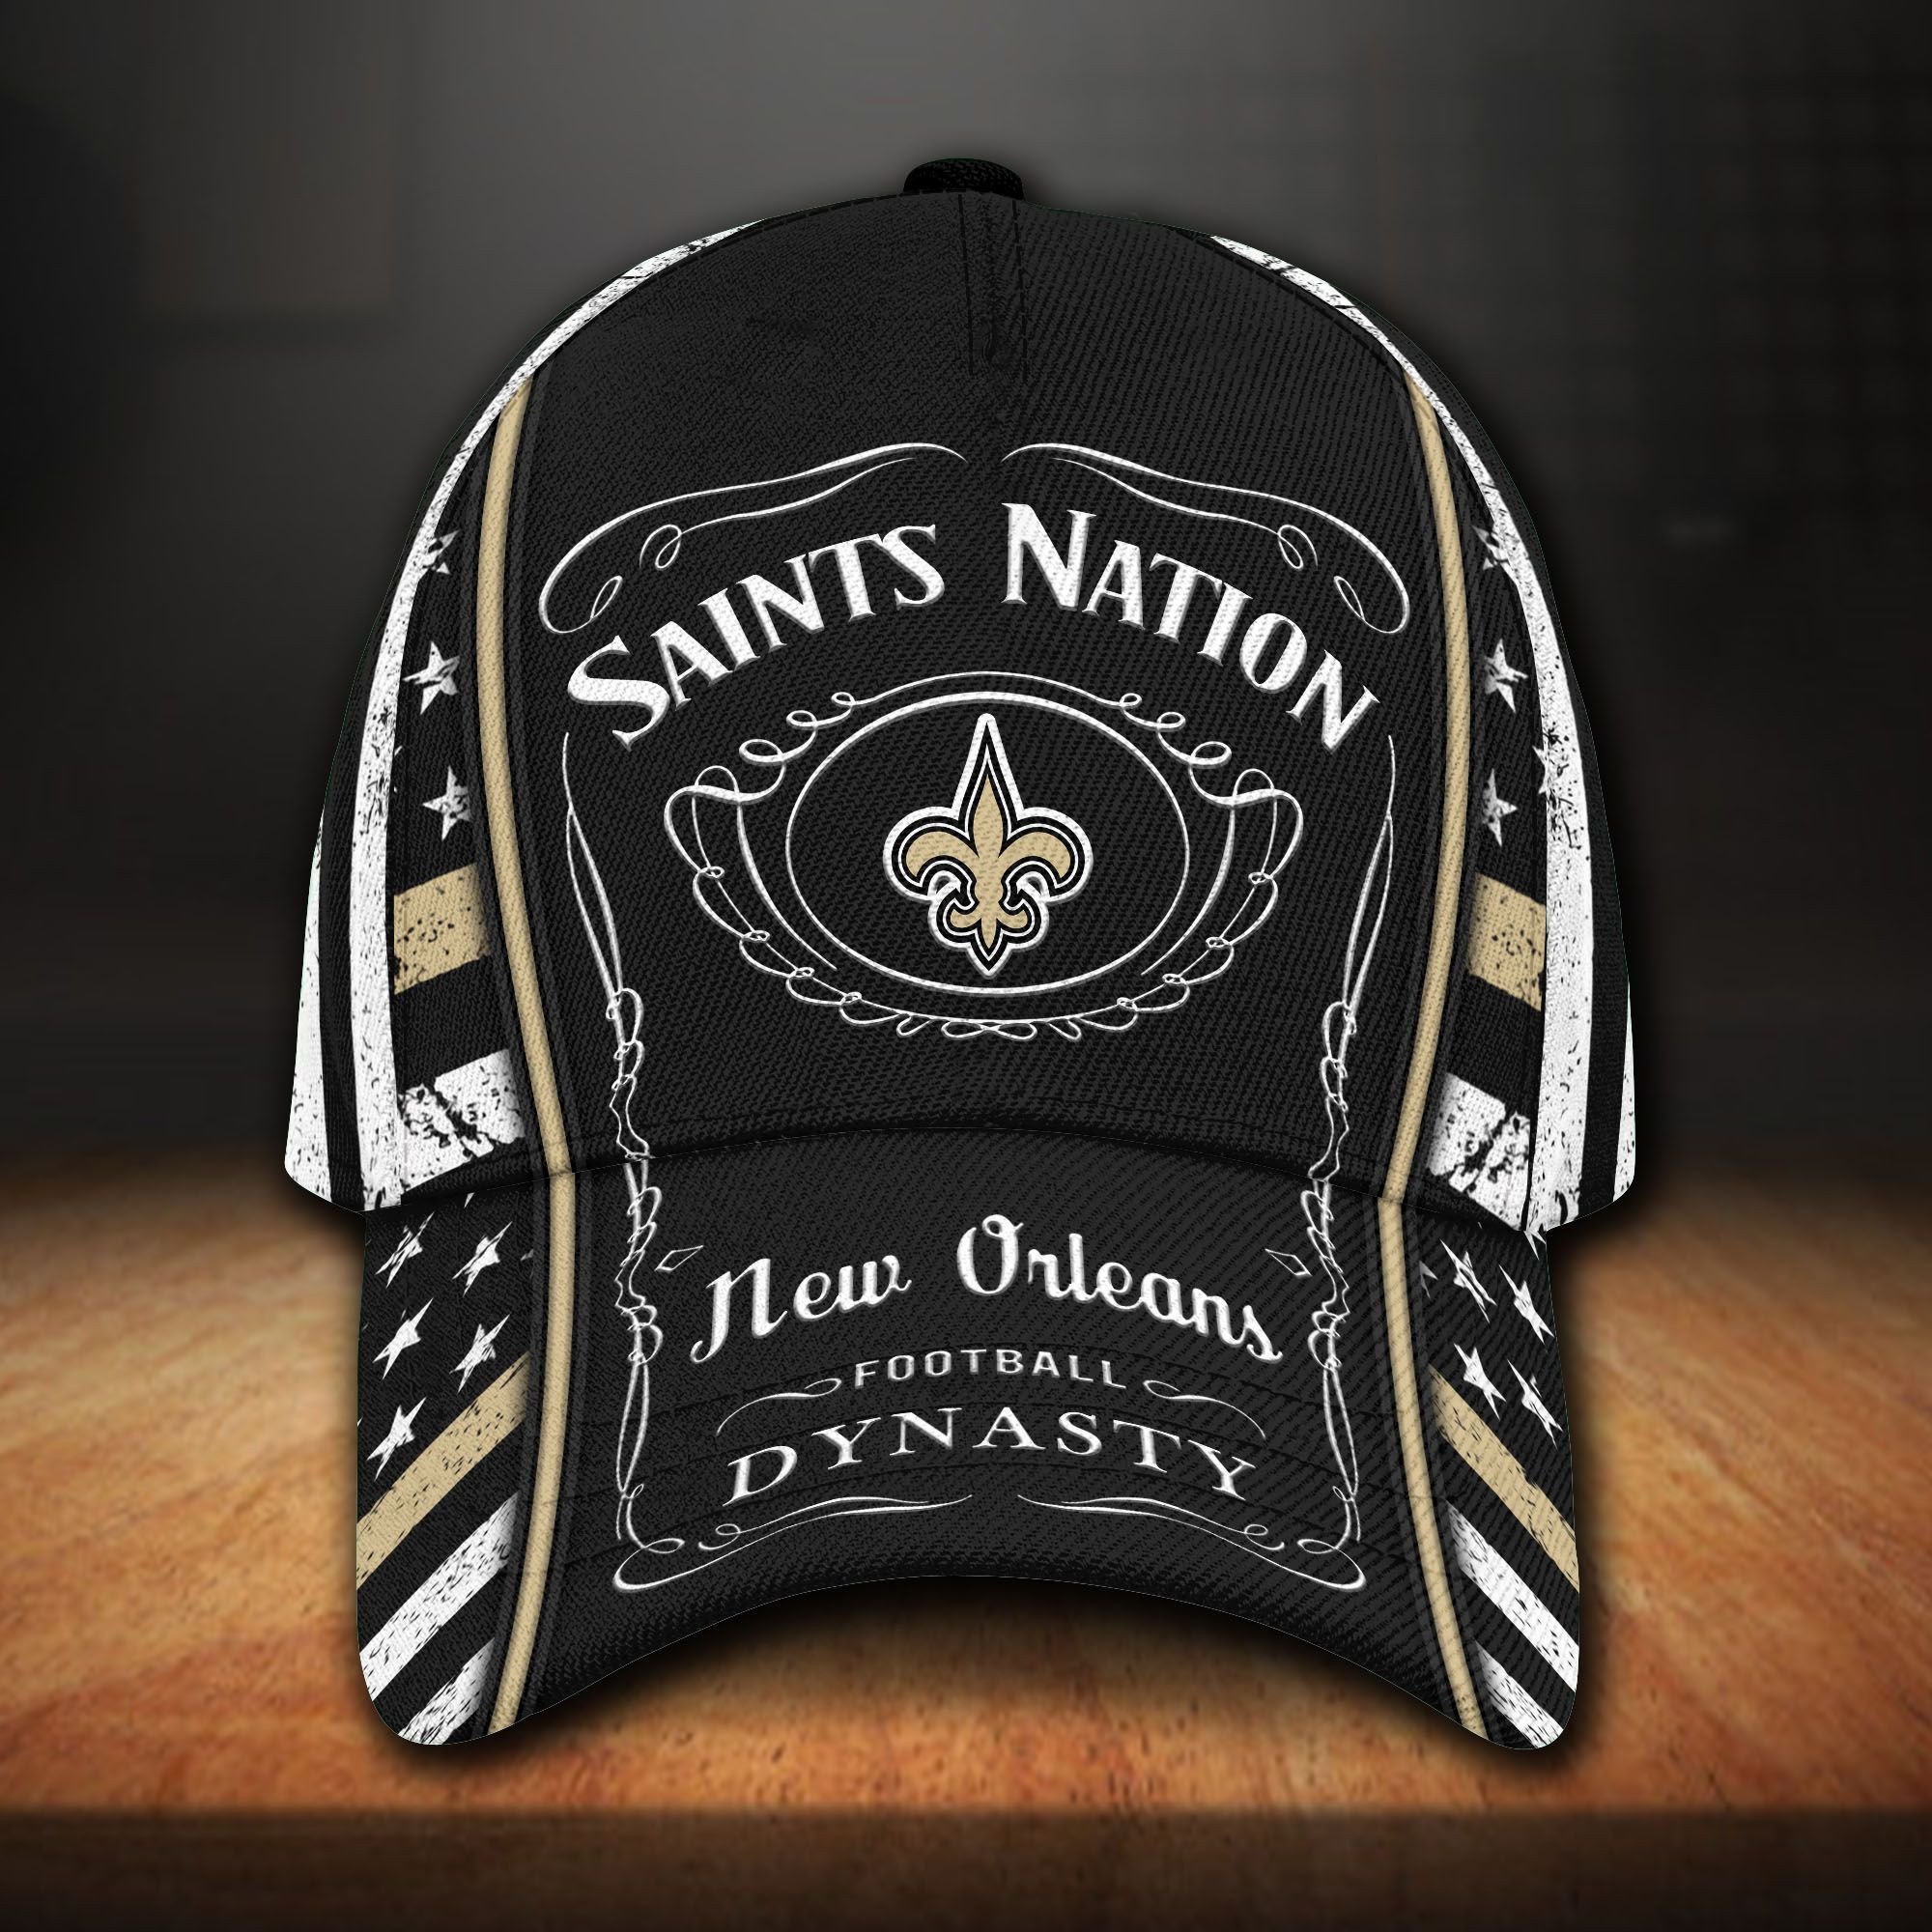 BEST New Orleans Saints Nation Football Dynasty Jack Daniel Hat